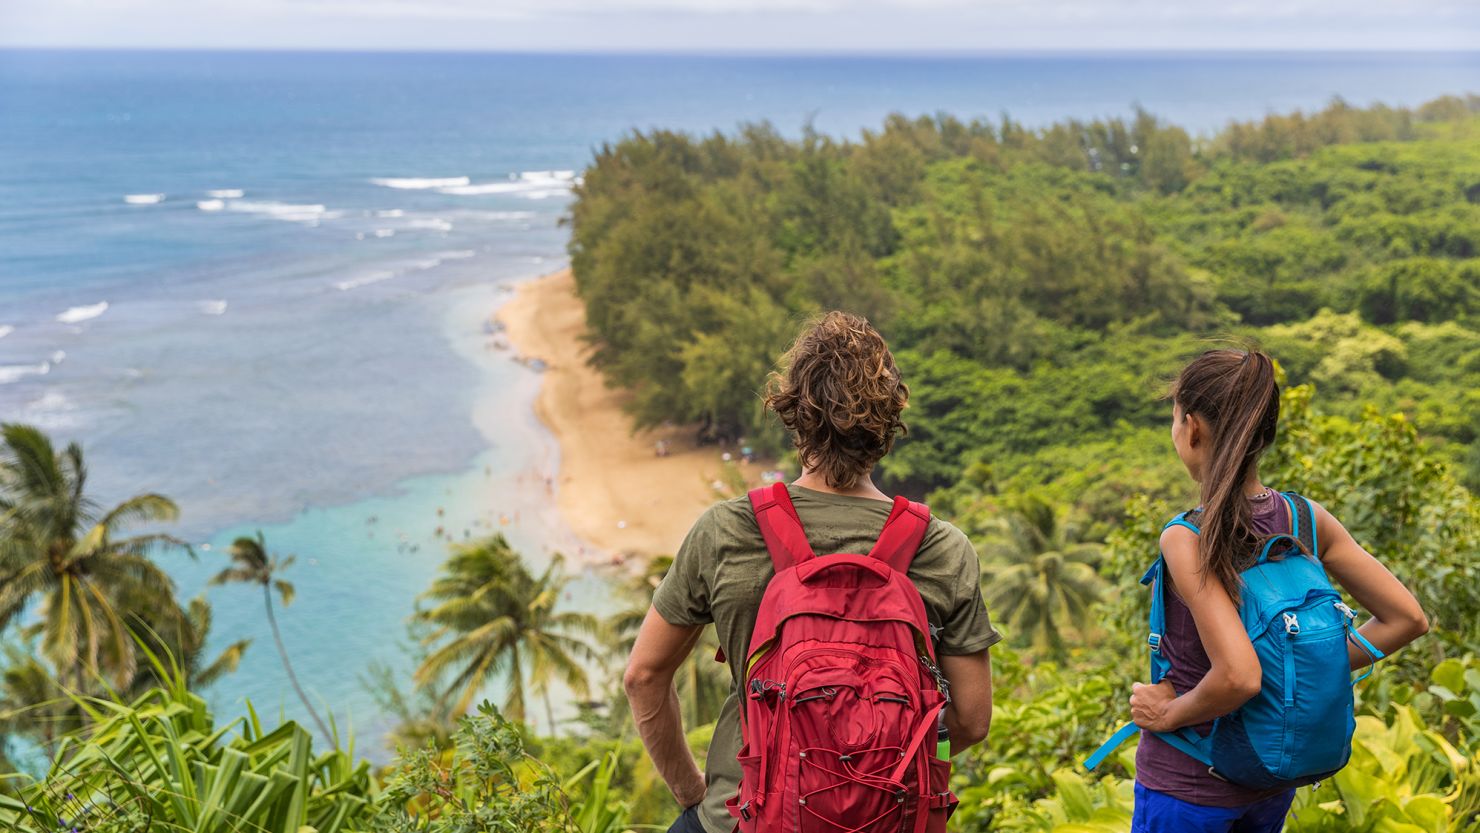 Hikers couple hiking on Kalalau trail overlooking beach coastal walk two tourists with backpacks walking outdoor in Kauai island, Hawaii summer travel leisure activity active lifestyle.